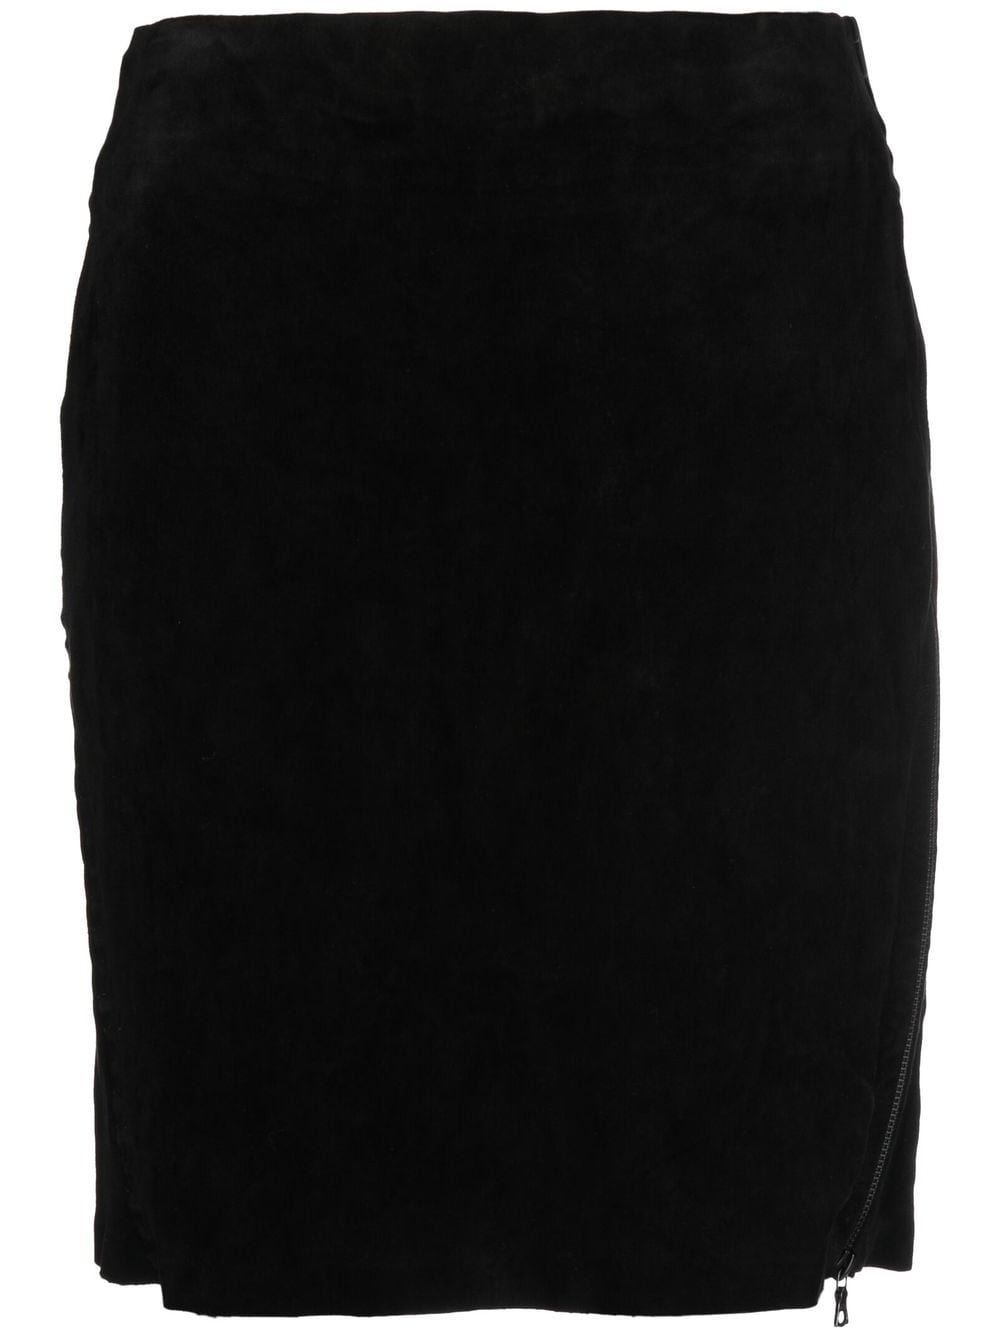 stitch-detail leather skirt